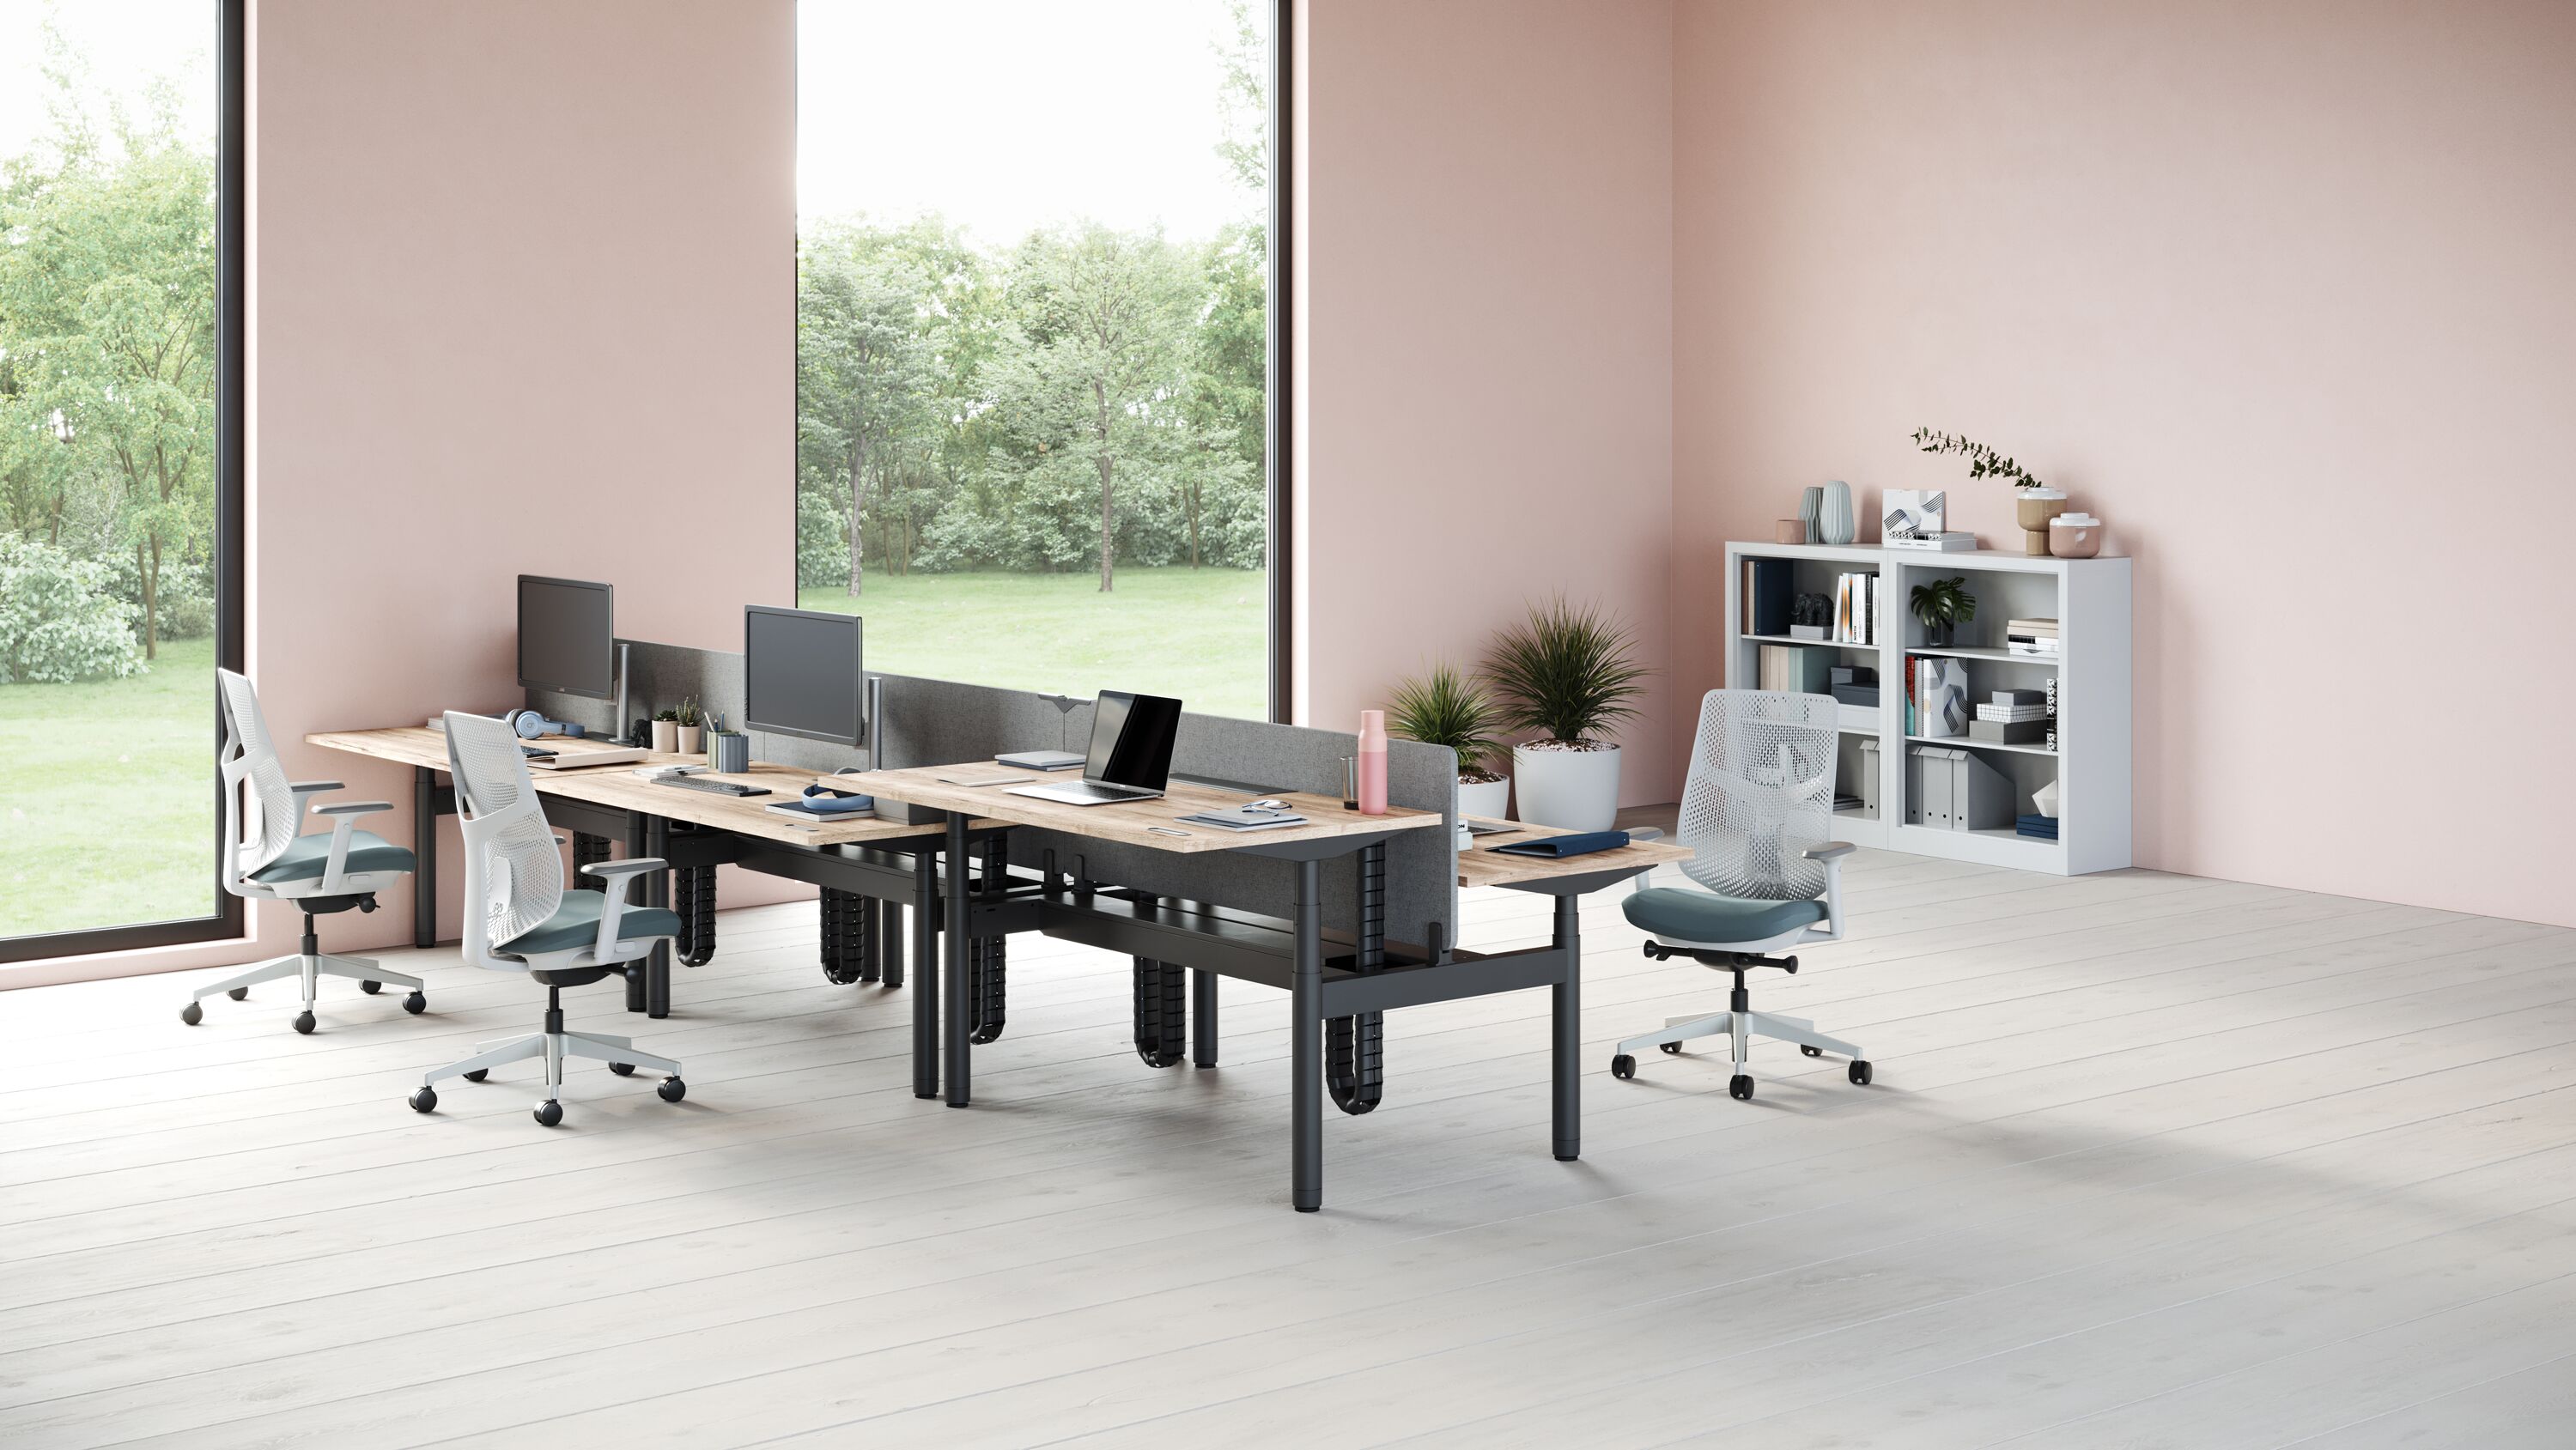 standing desks in office space